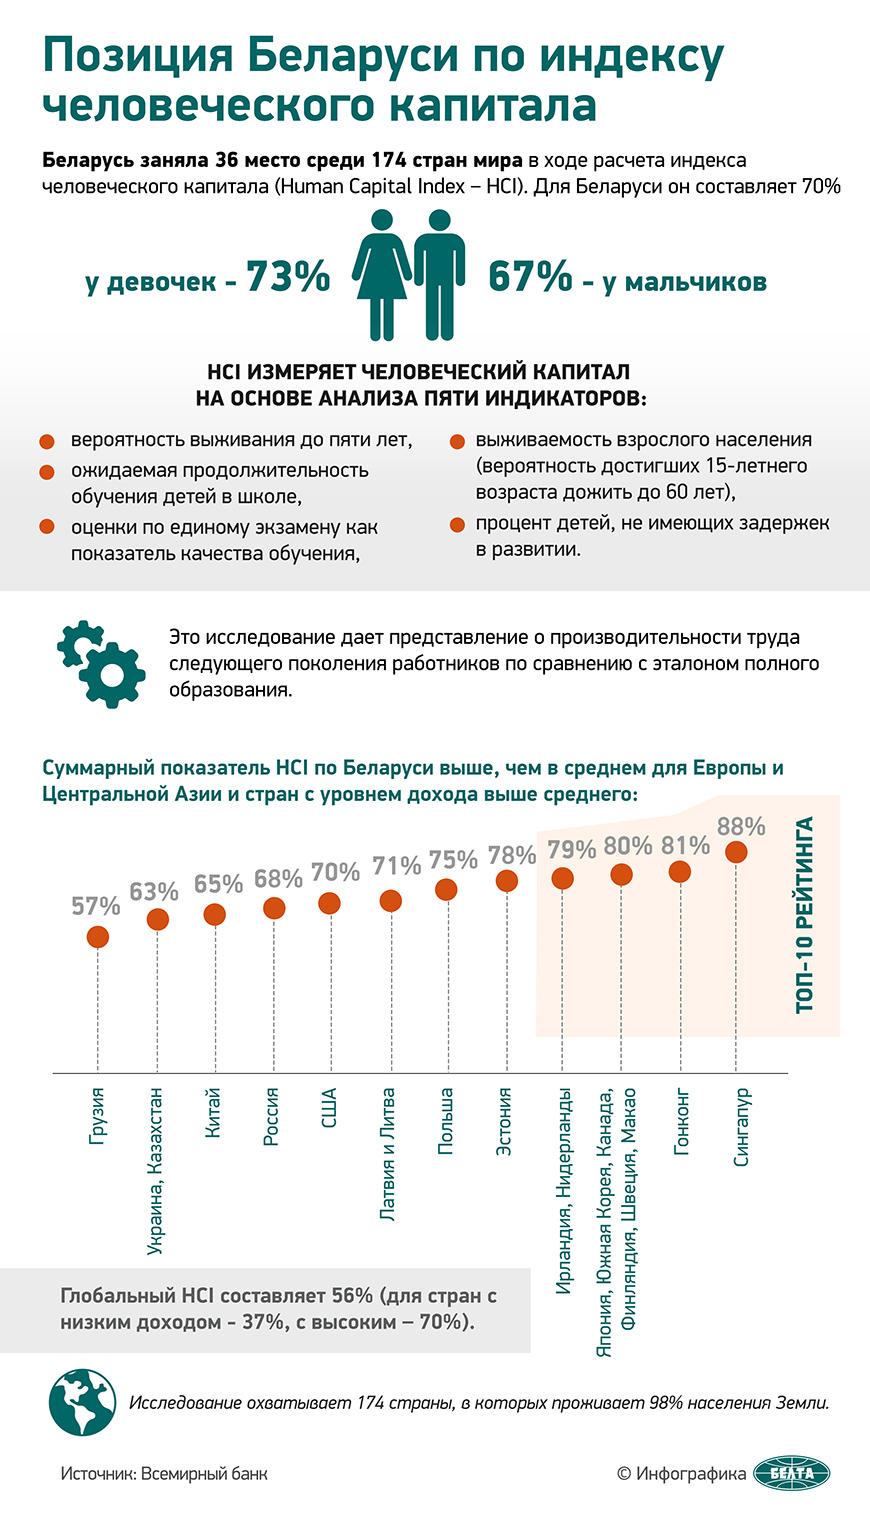 Позиция Беларуси по индексу человеческого капитала